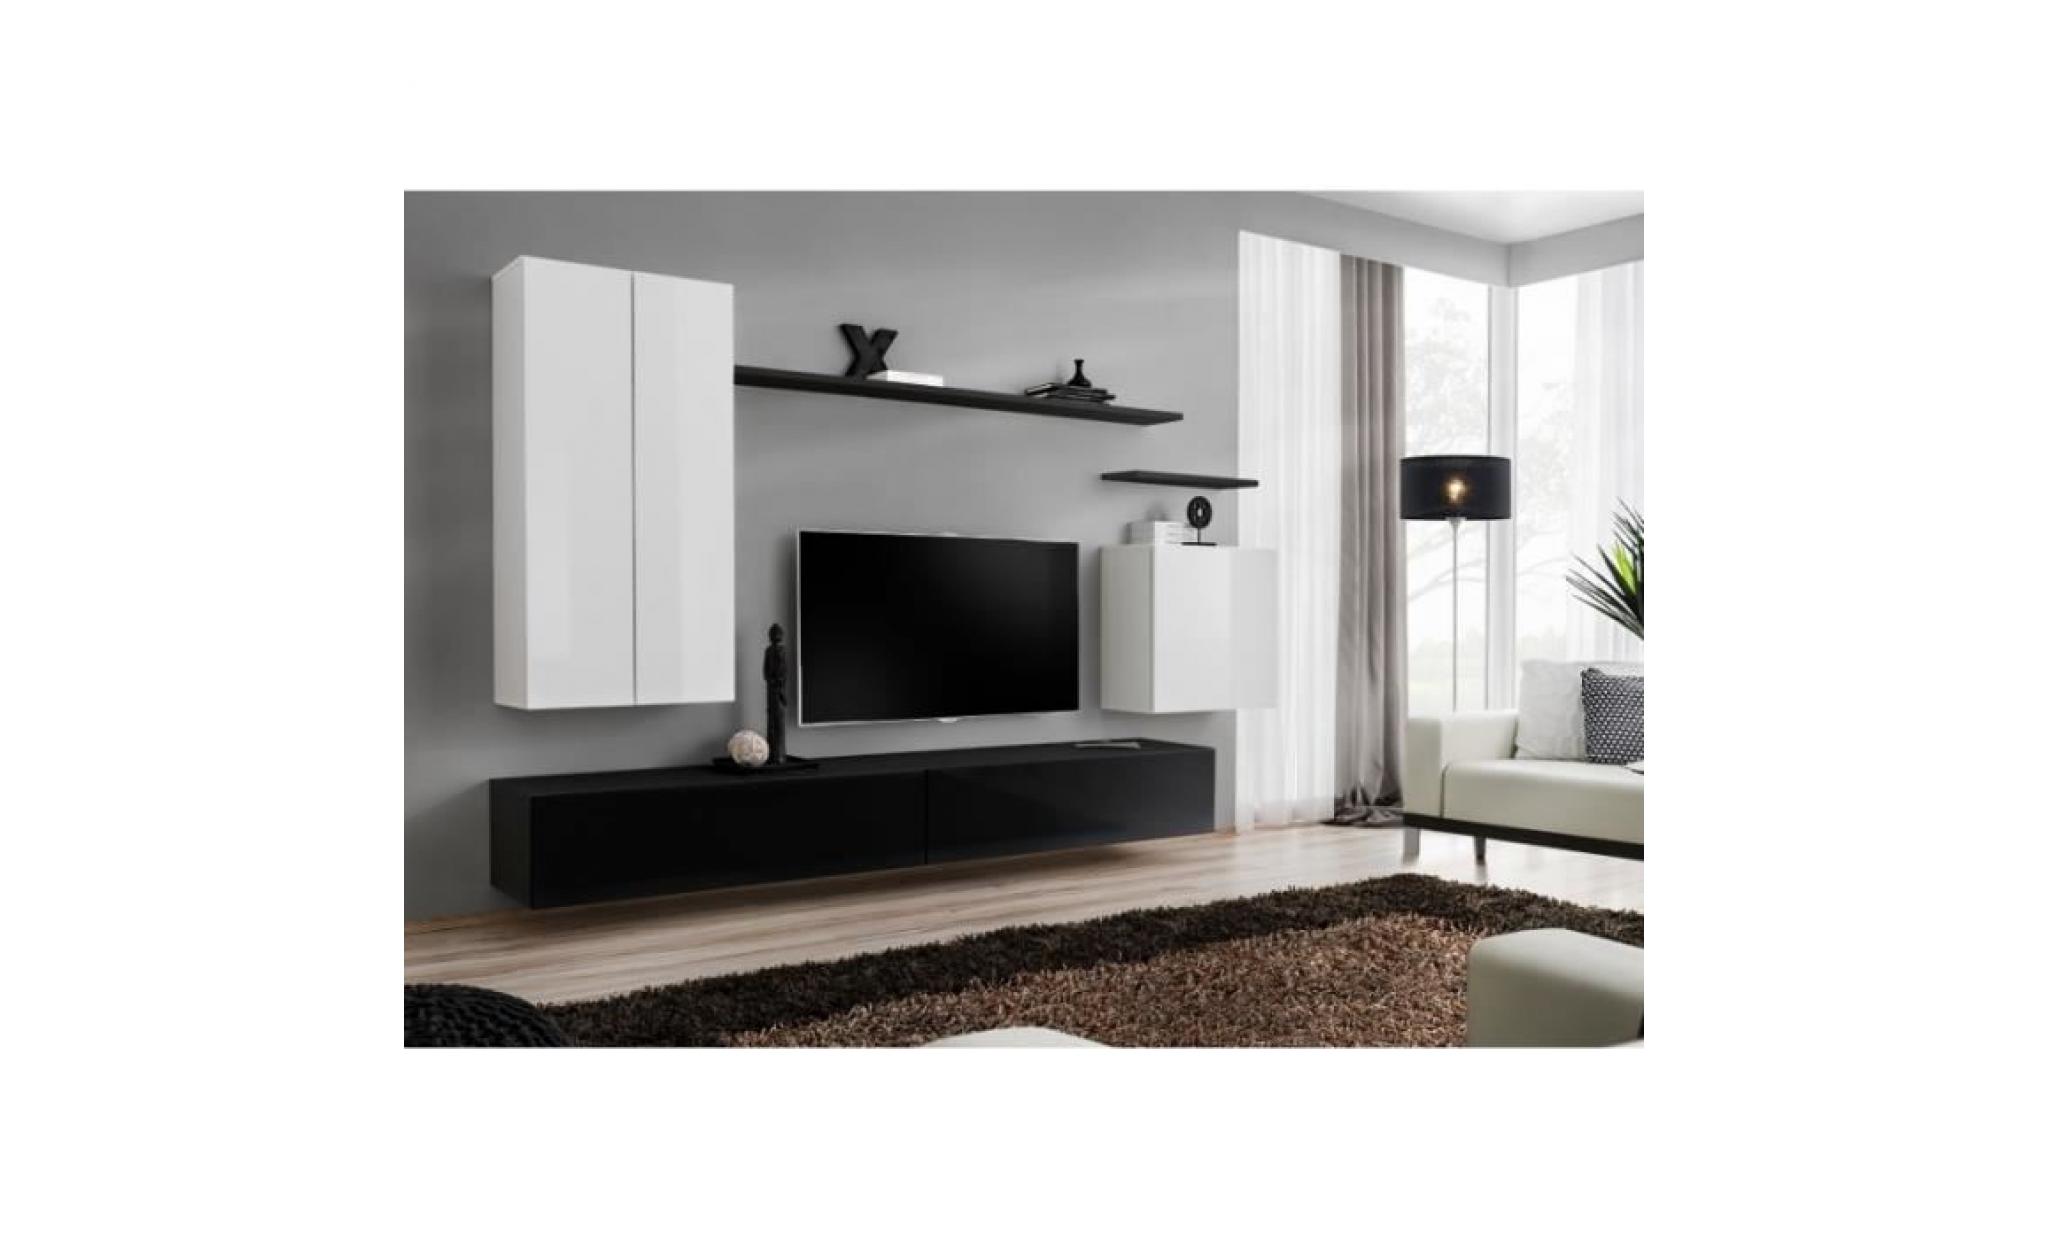 ensemble meuble tv mural    switch ii   270 cm x 160 cm x 40 cm   noir et blanc